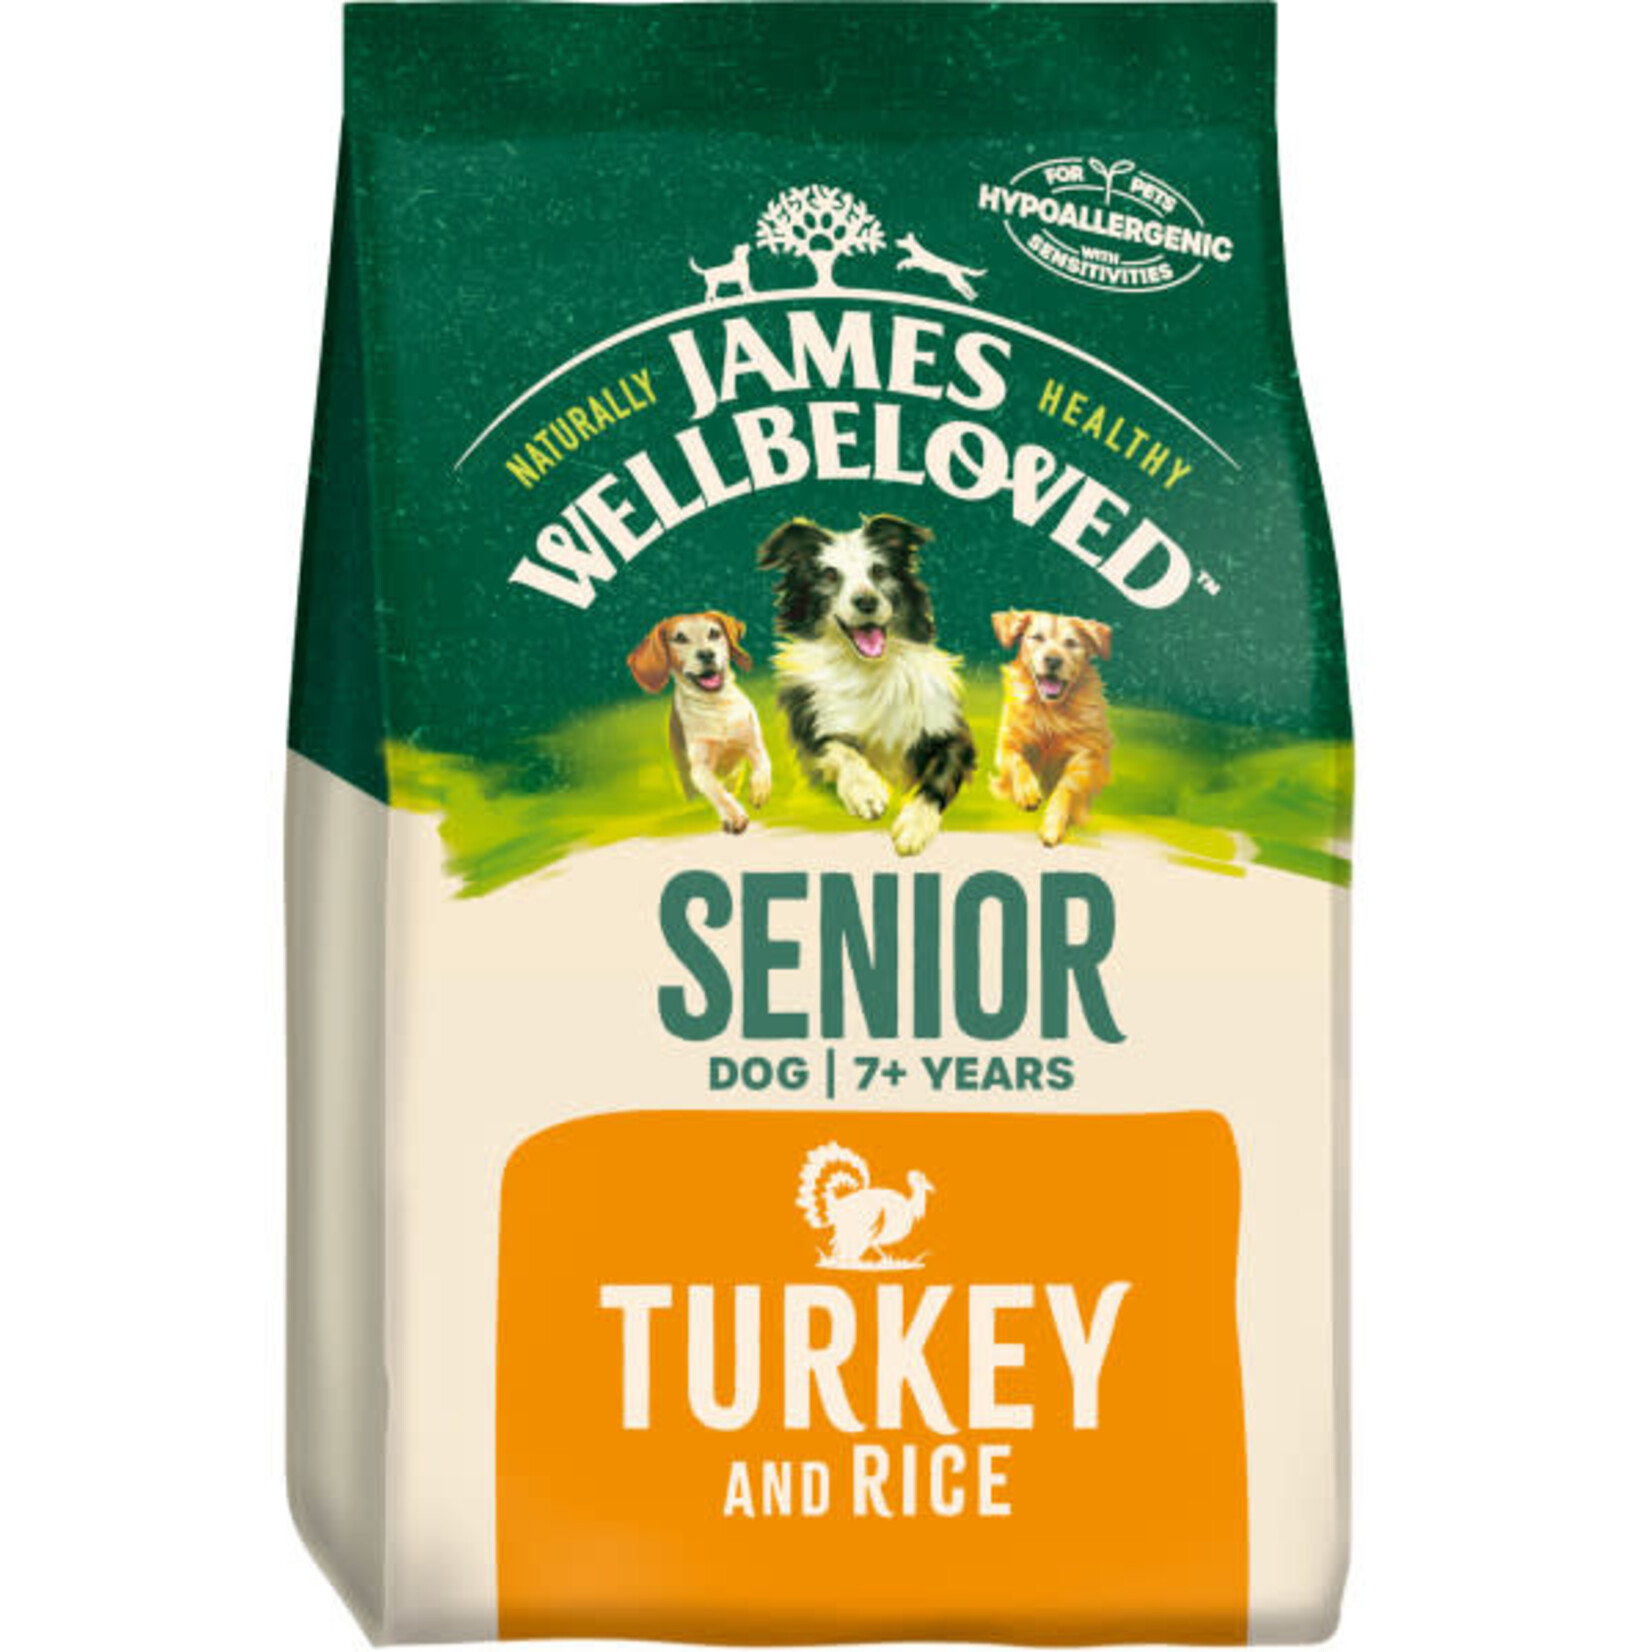 James Wellbeloved Senior Dog Dry Food, Turkey & Rice